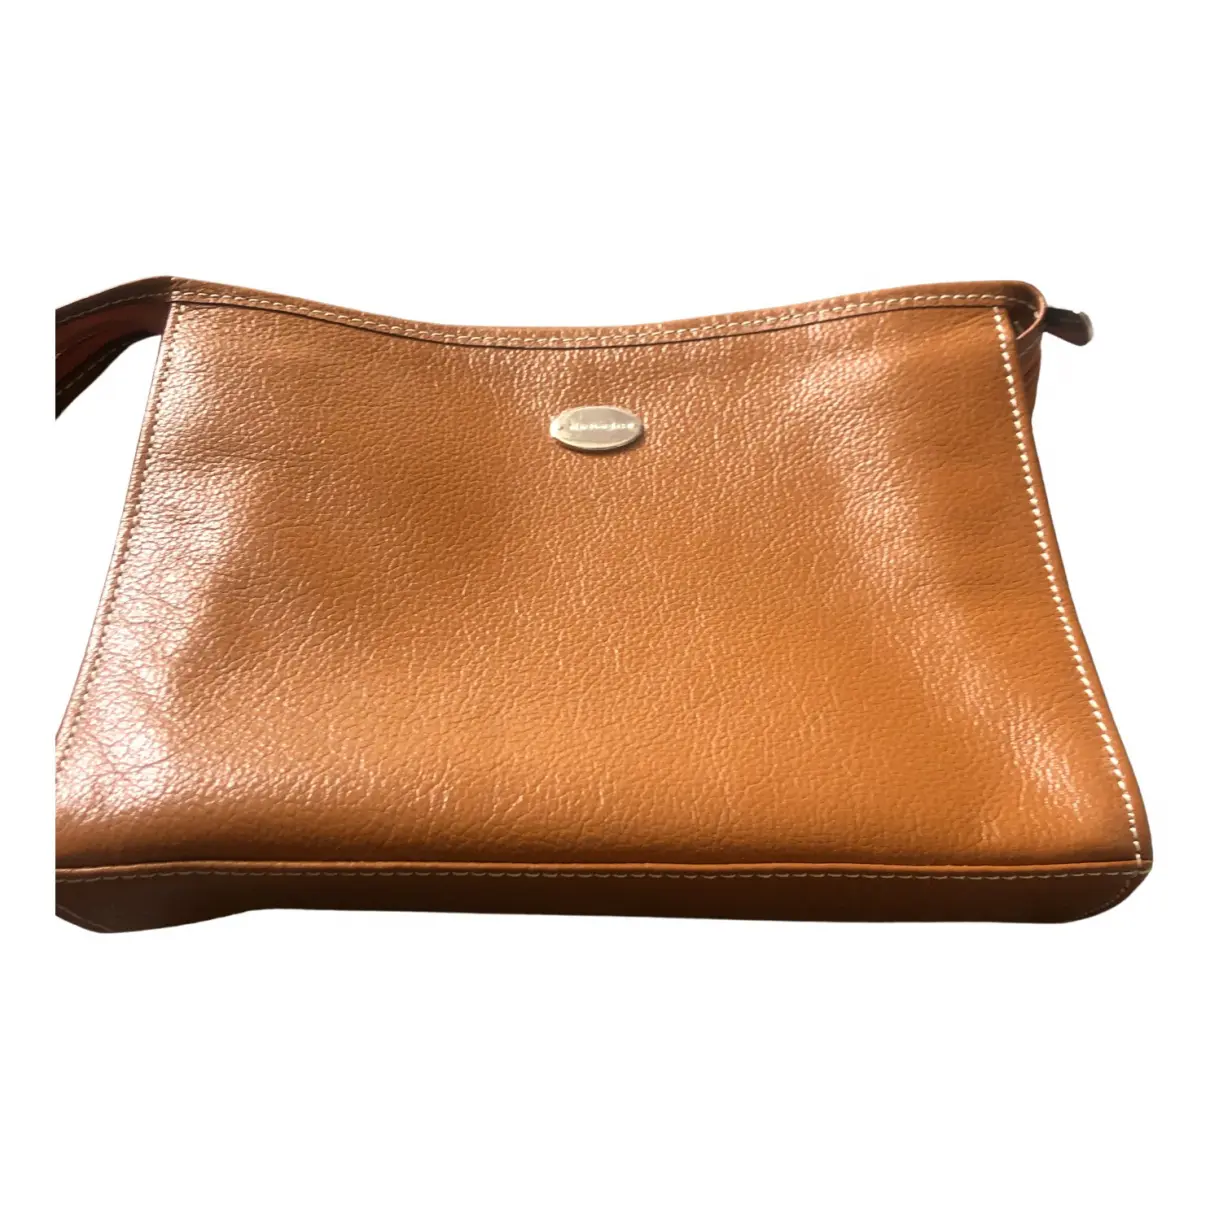 Leather clutch bag Mac Douglas